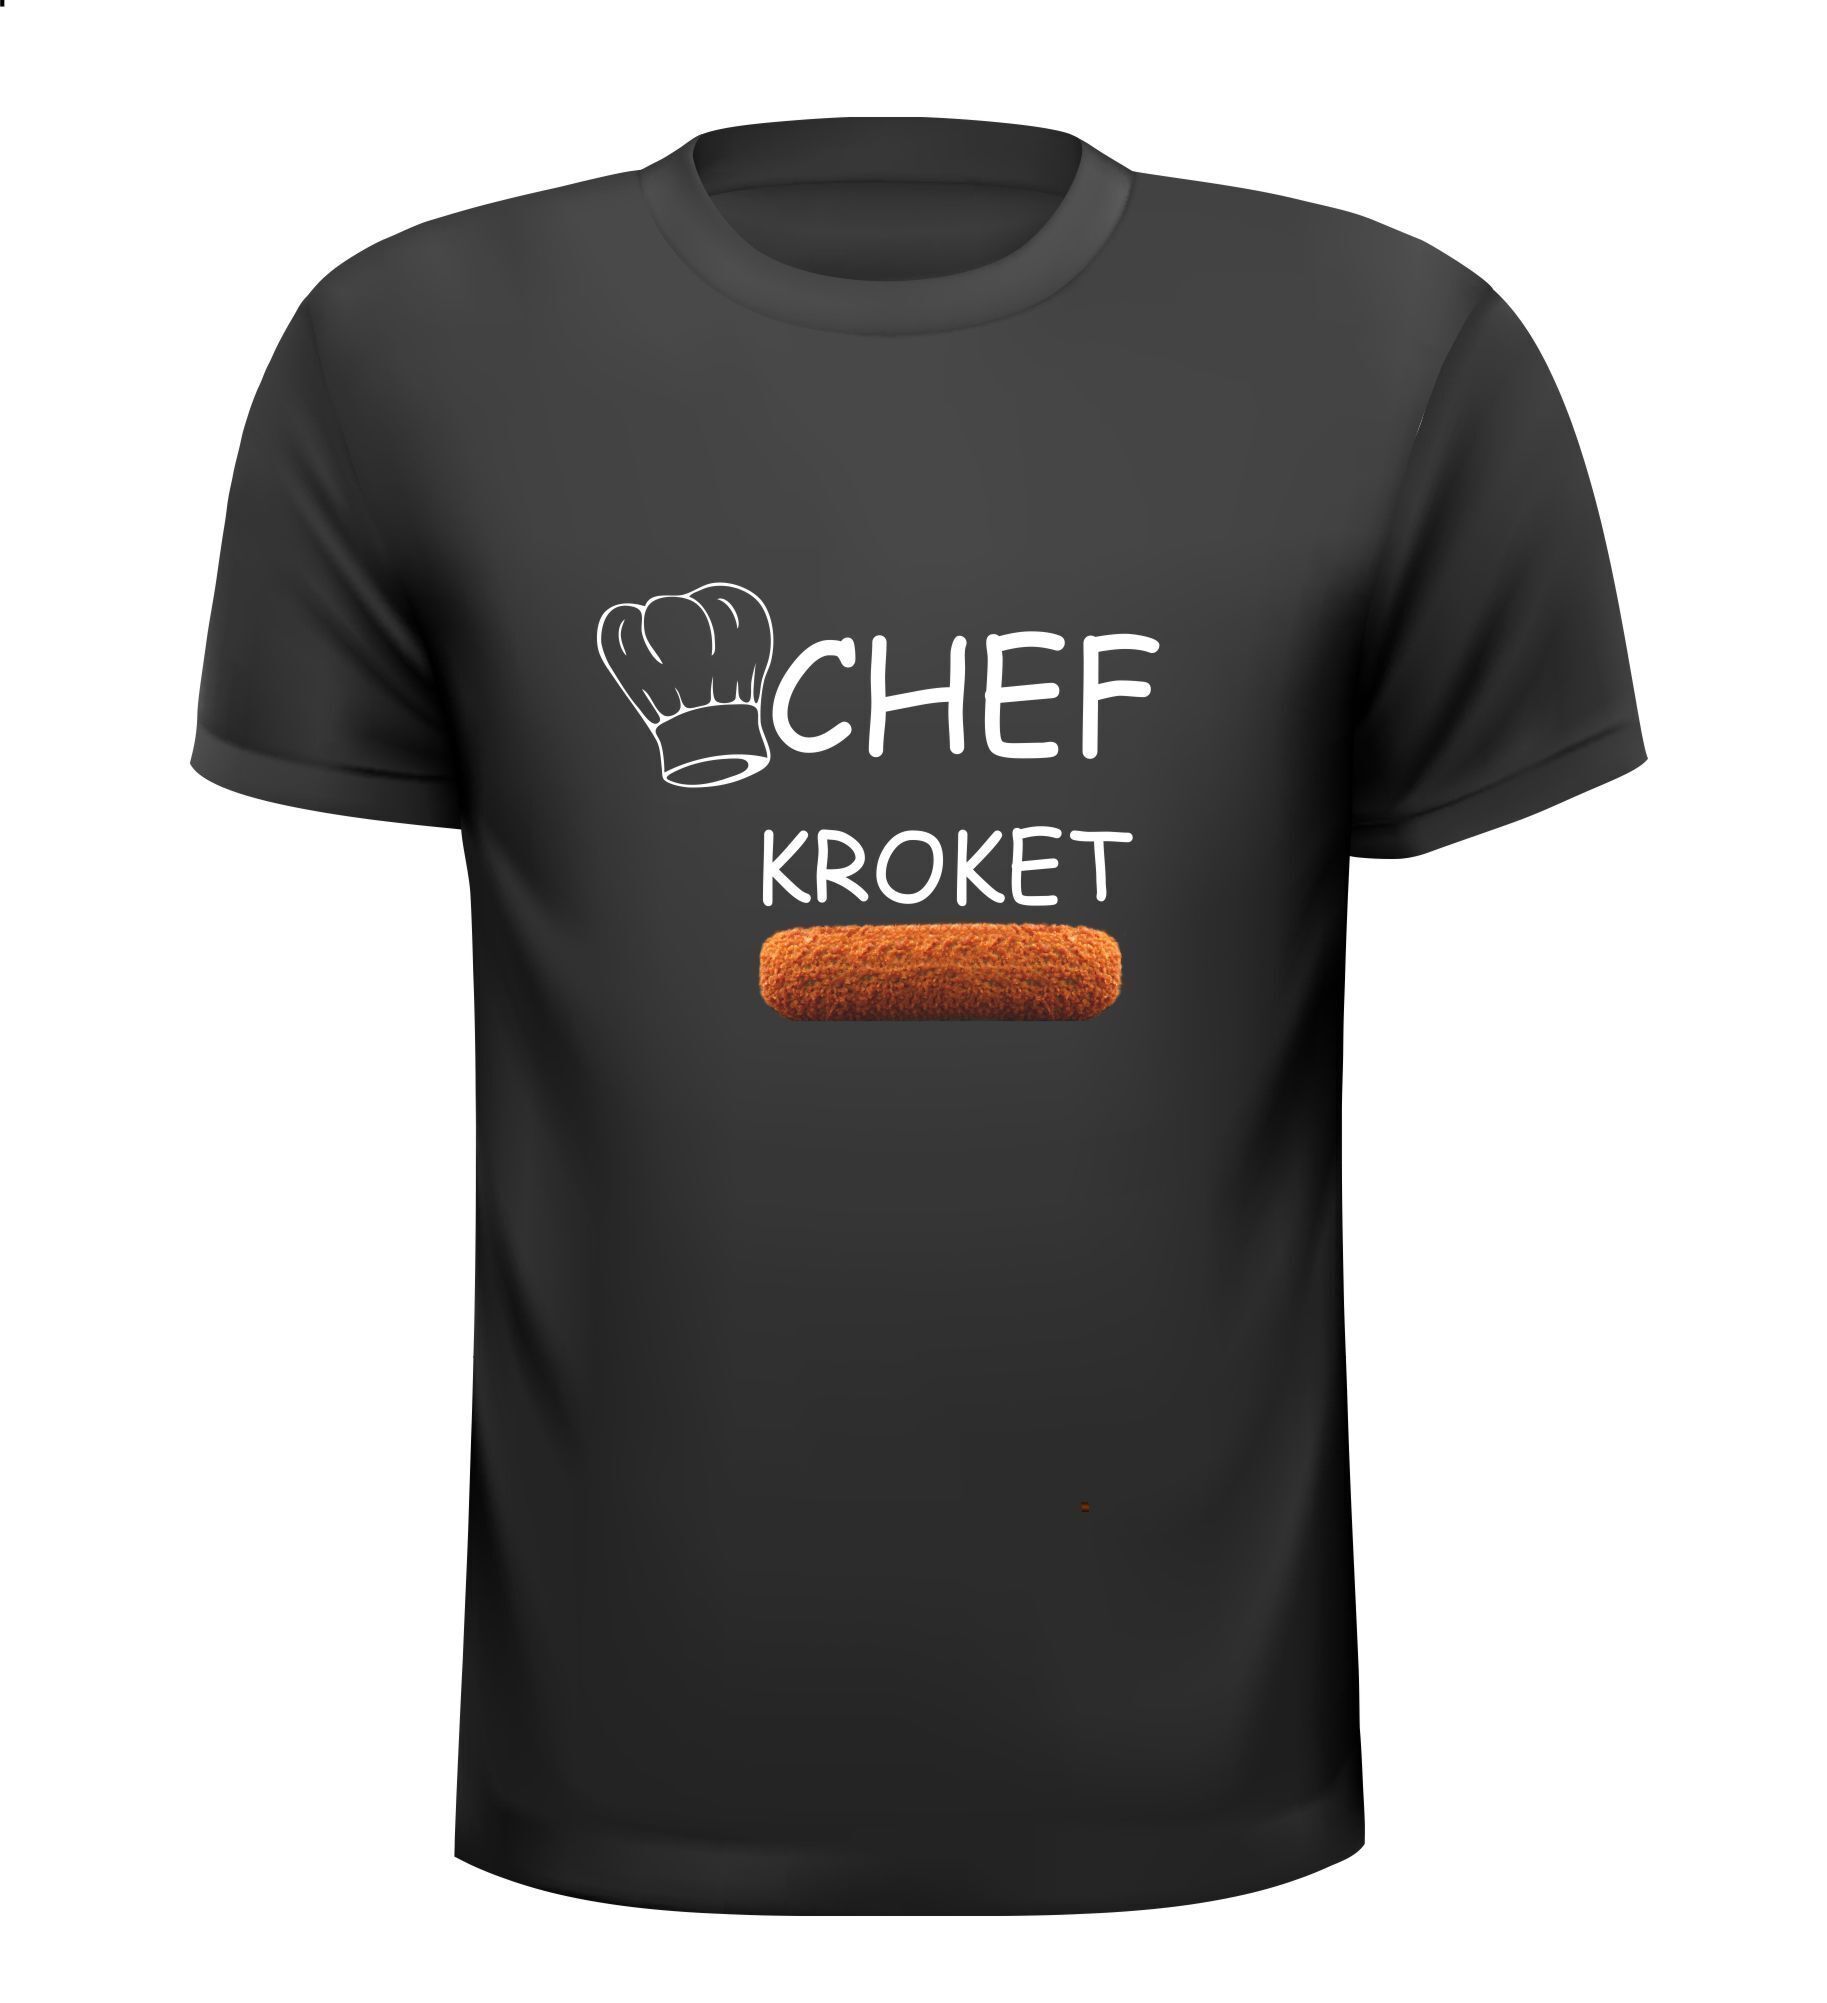 Chef kroket t-shirt snackbar patatzaak fastfood